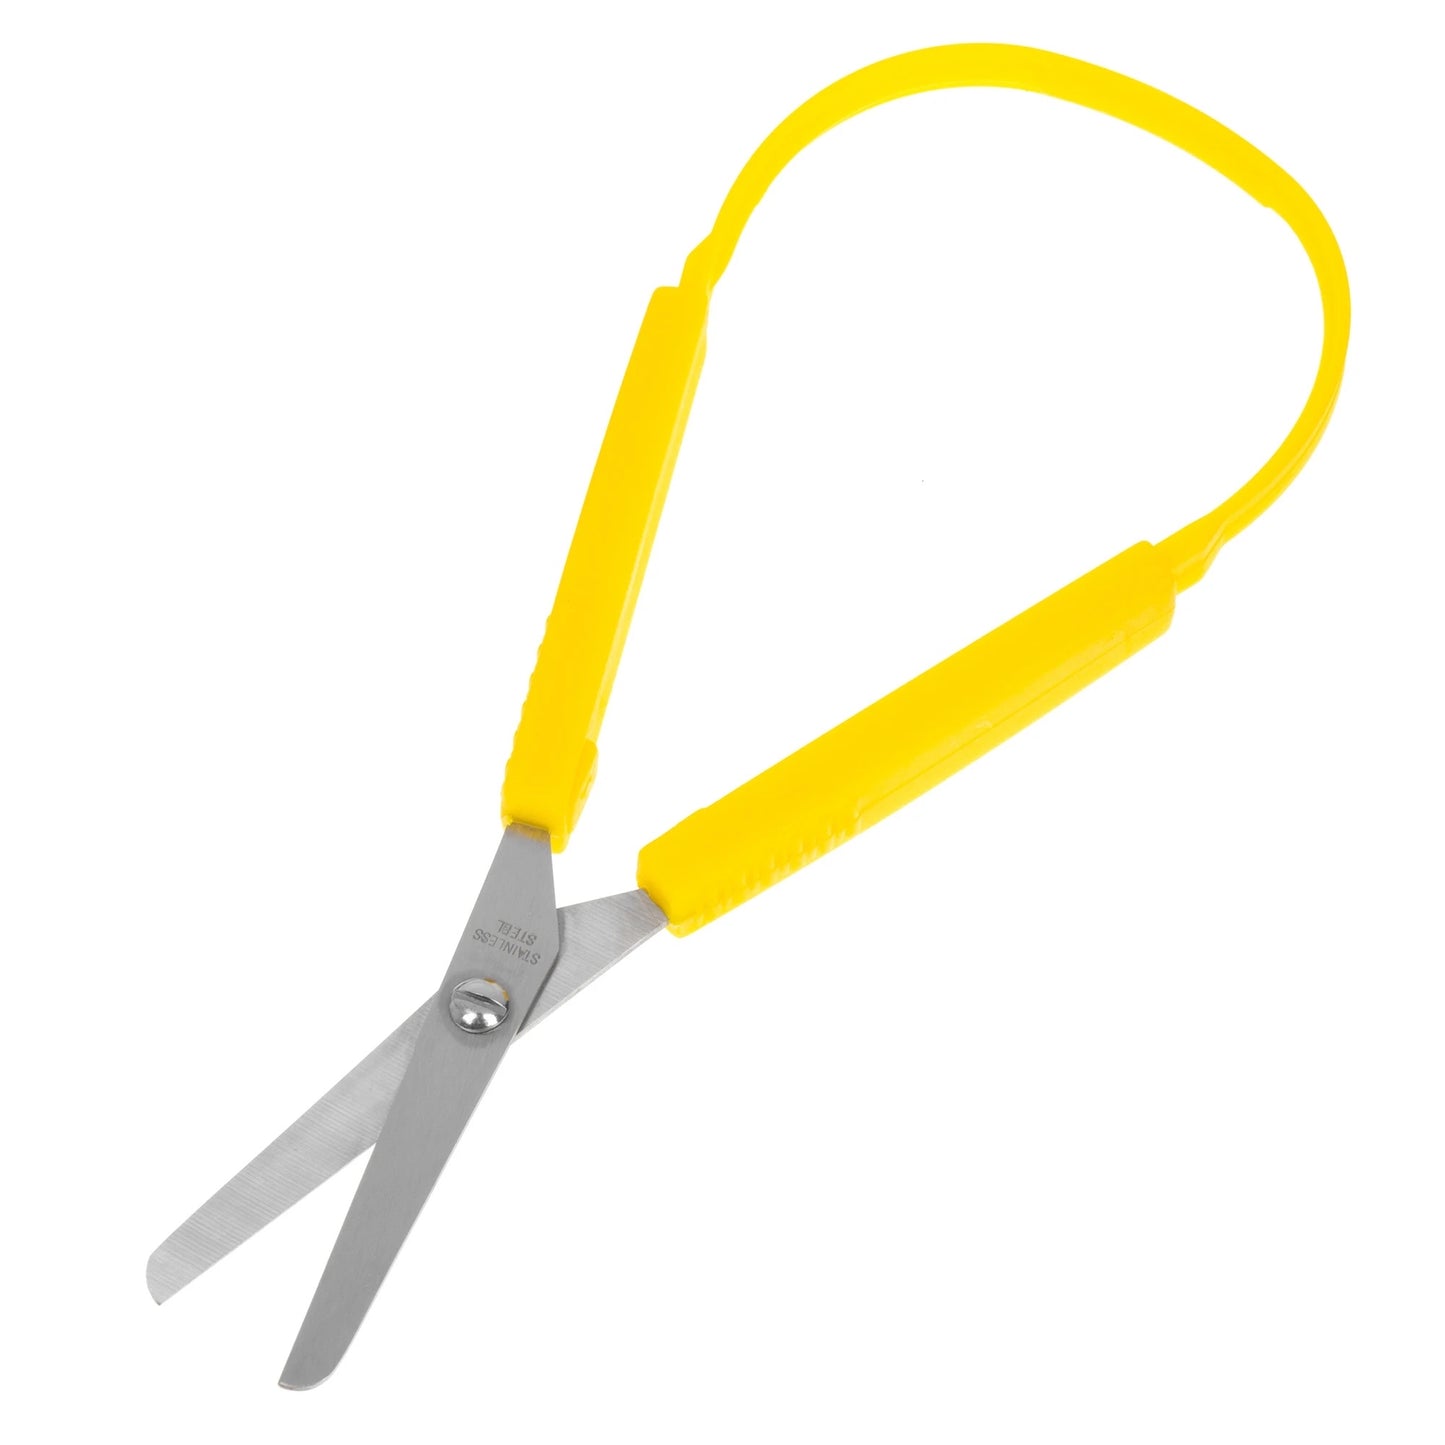 Adaptive Self-Opening Scissors